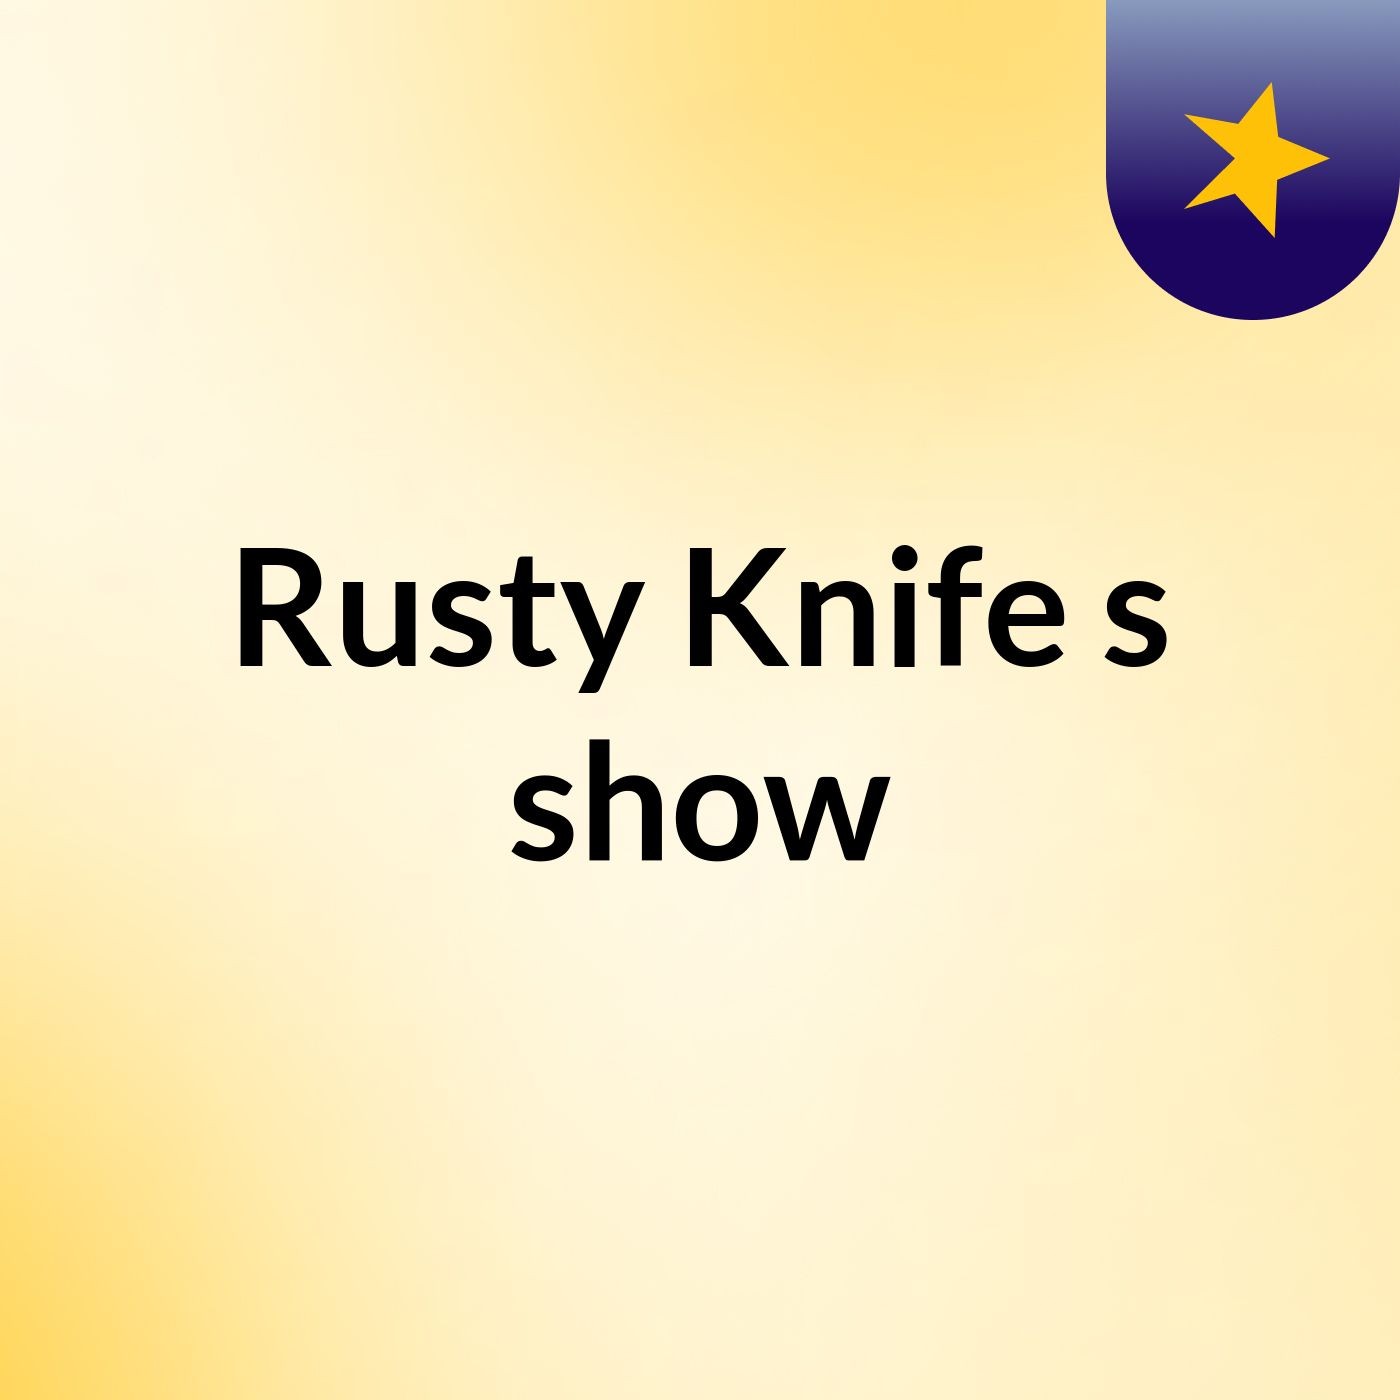 Rusty Knife's show